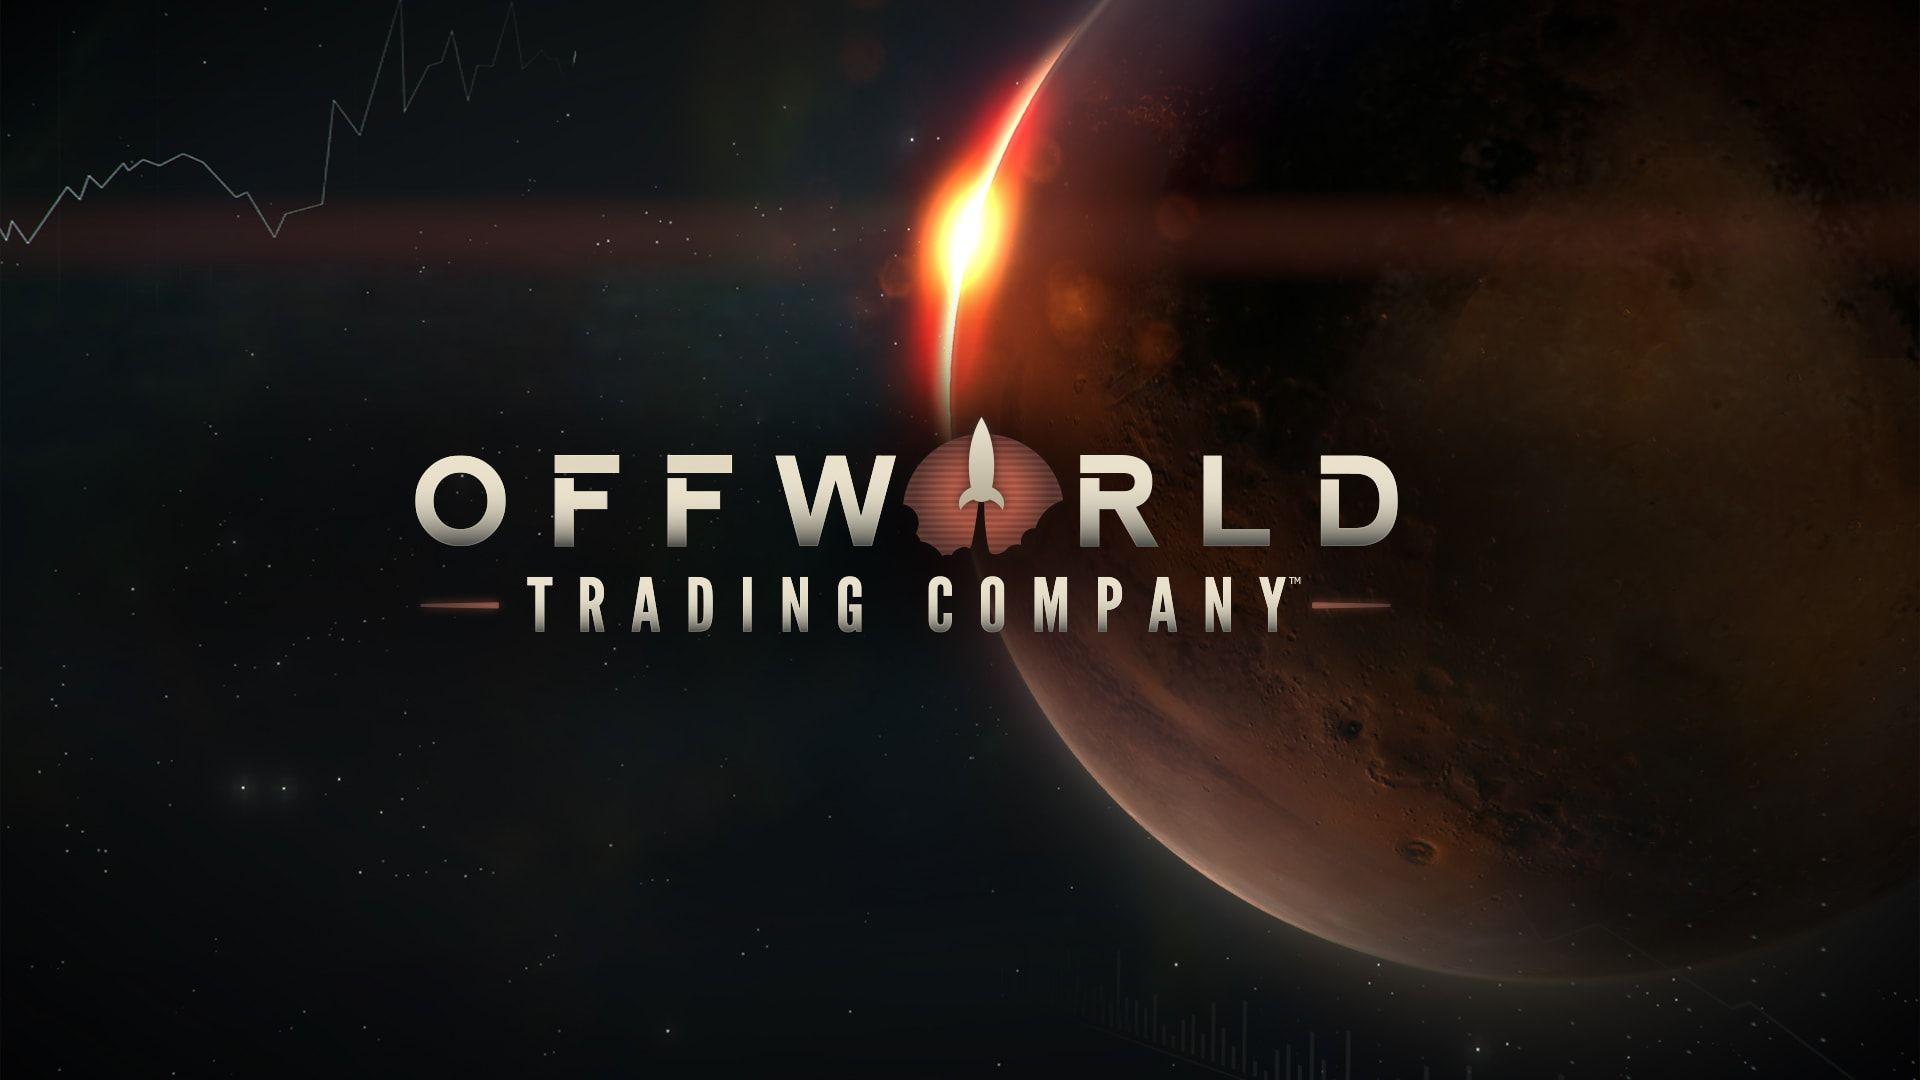 Offworld Trading Company HD Desktop Wallpaperwallpaper.net